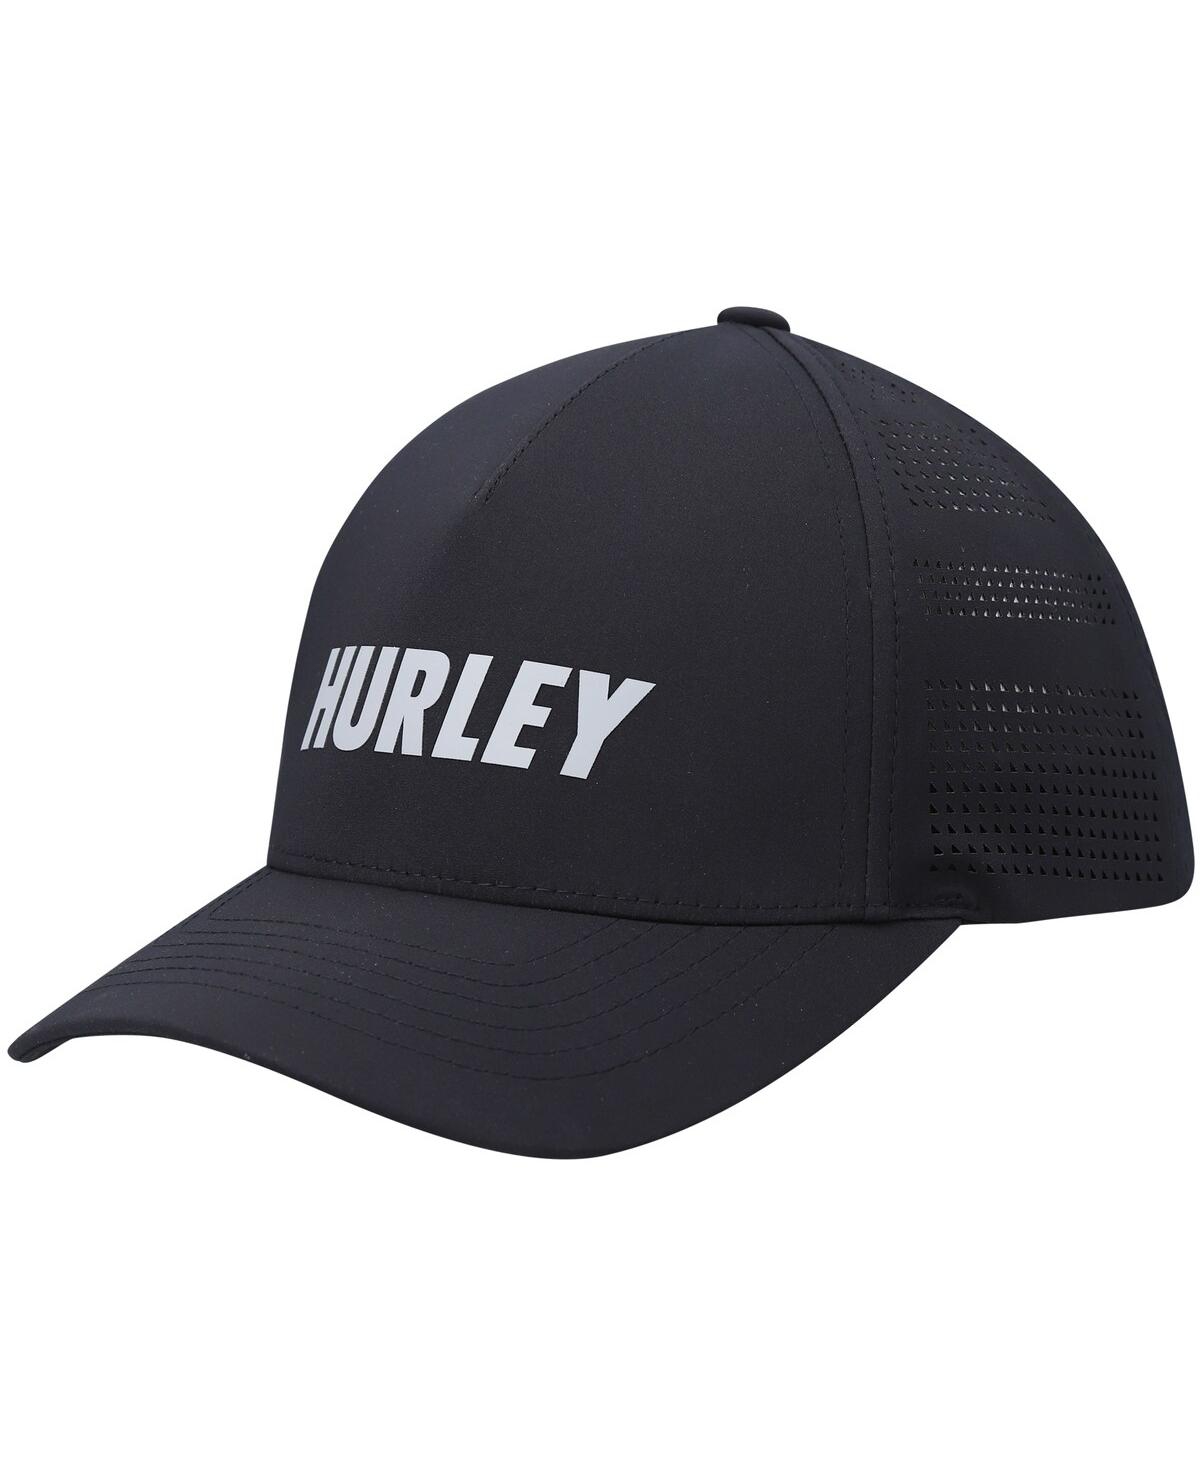 Hurley Men's  Black Canyon Adjustable Hat